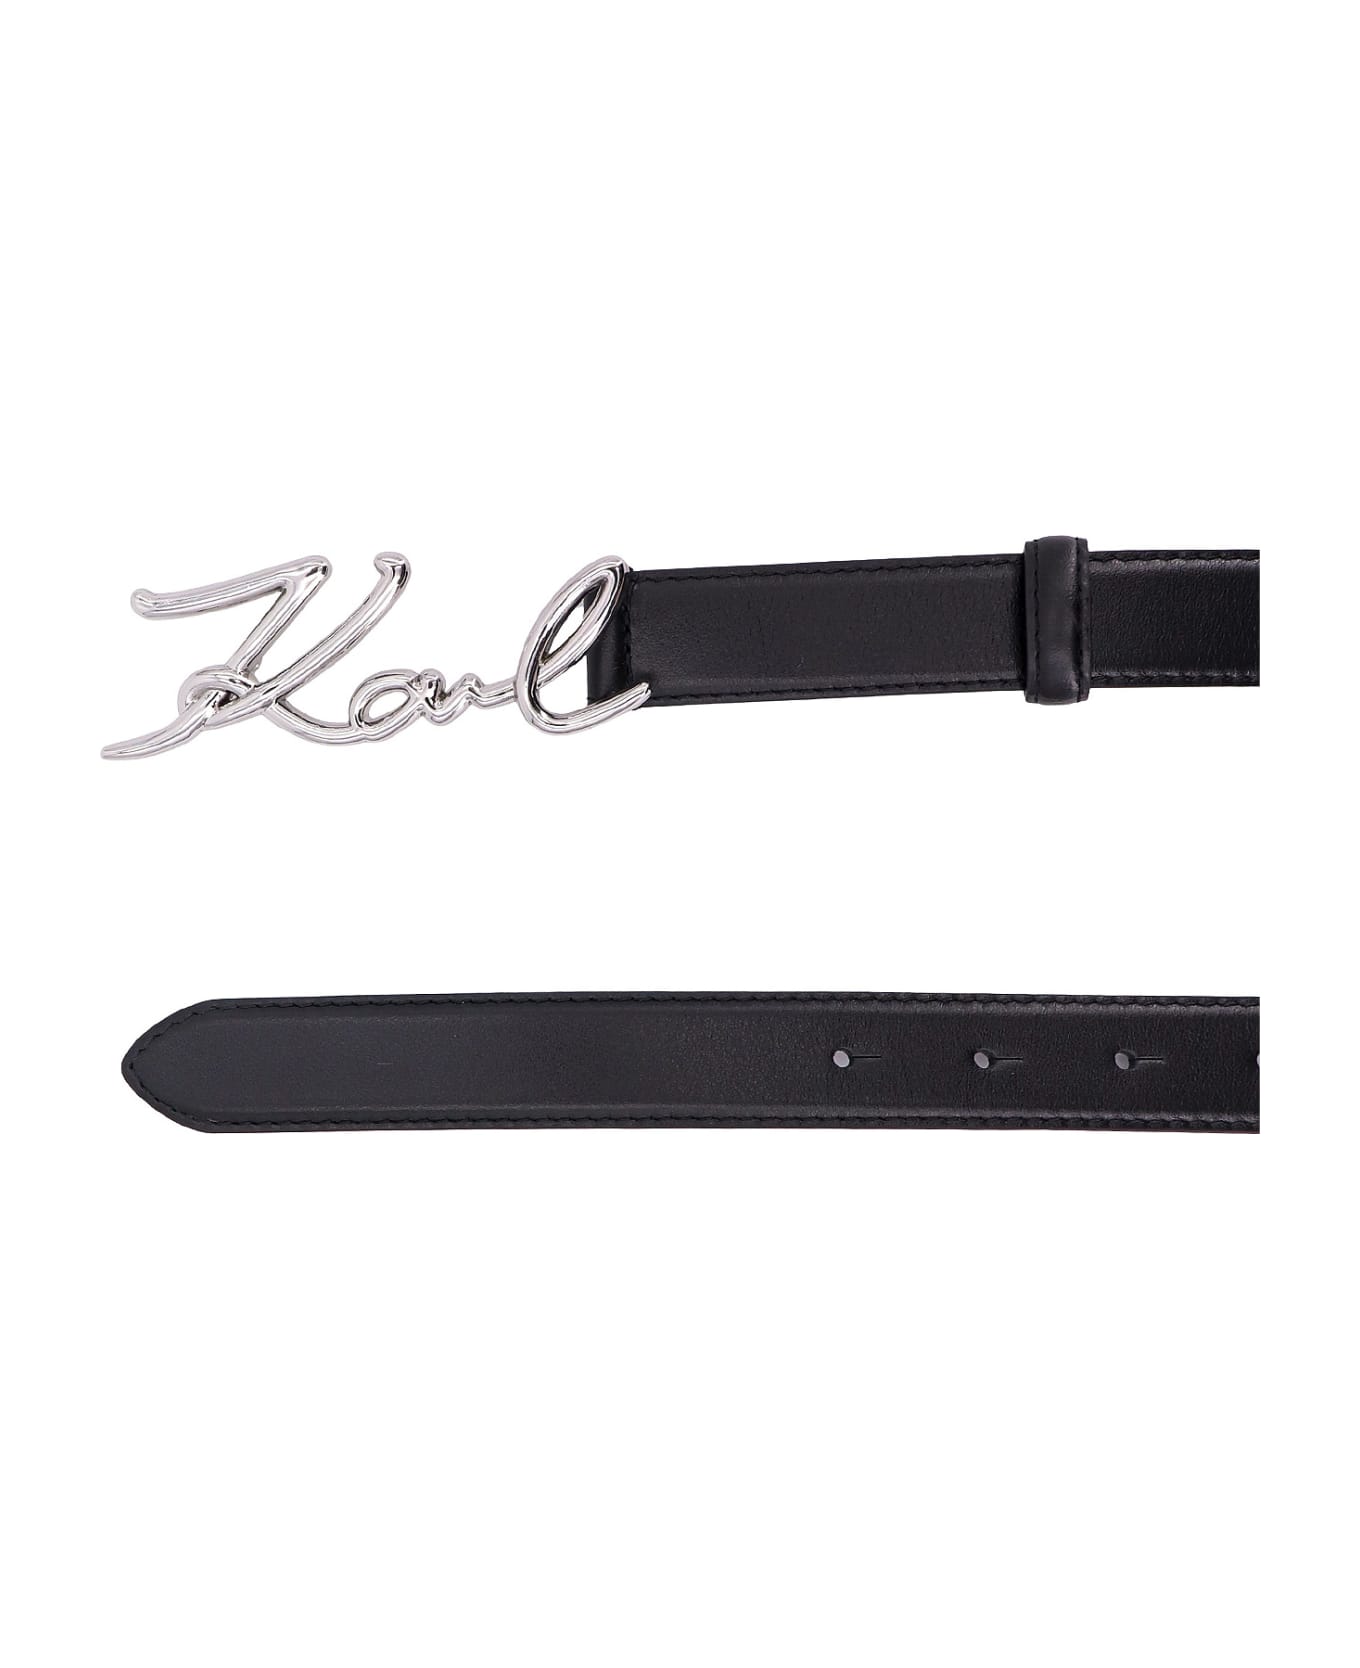 Karl Lagerfeld Belt - Black ベルト